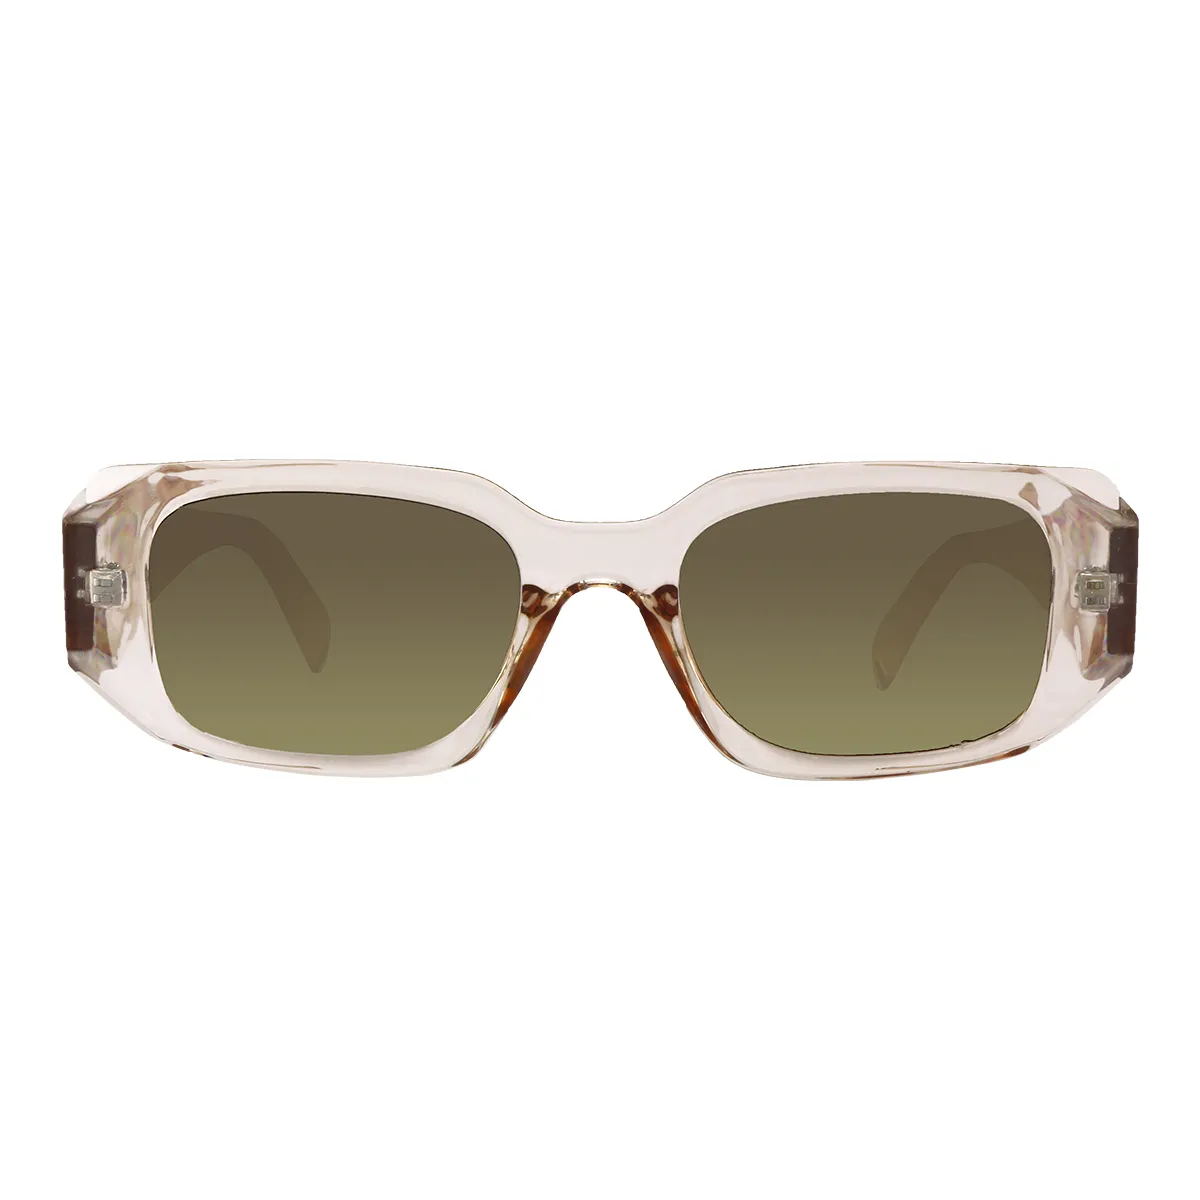 Arianwen - glasses Transparent-light-tea Sunglasses for Women